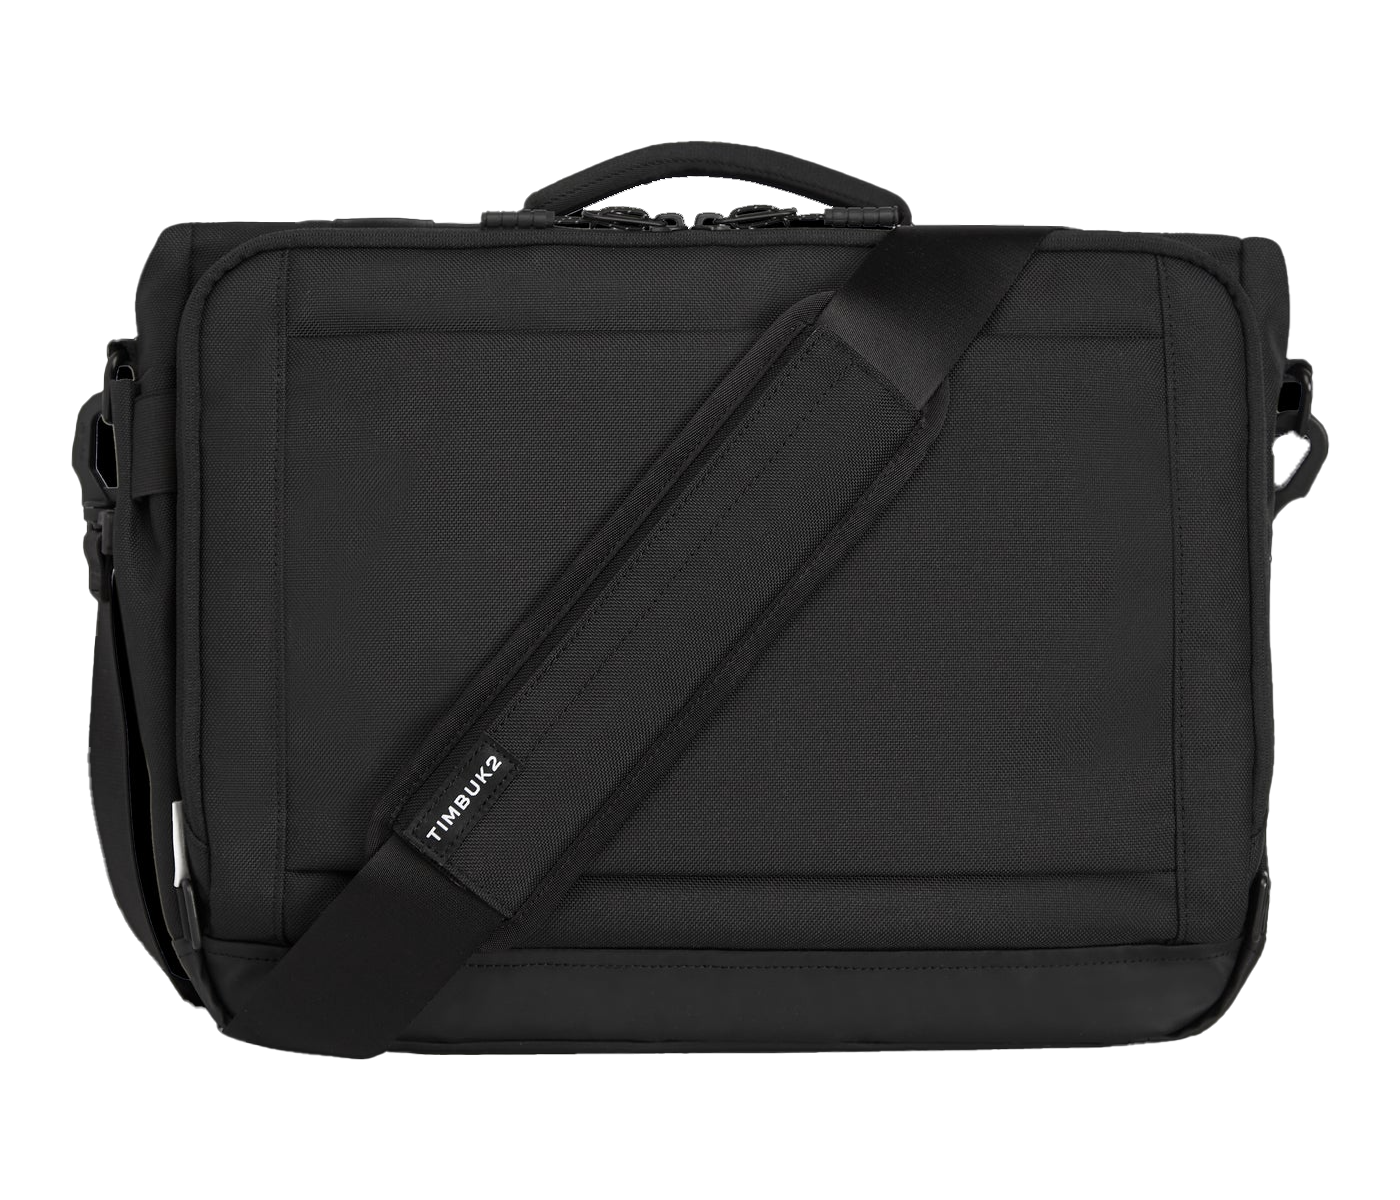 Timbuk2 Commute Messenger Bags 2.0, Eco Black